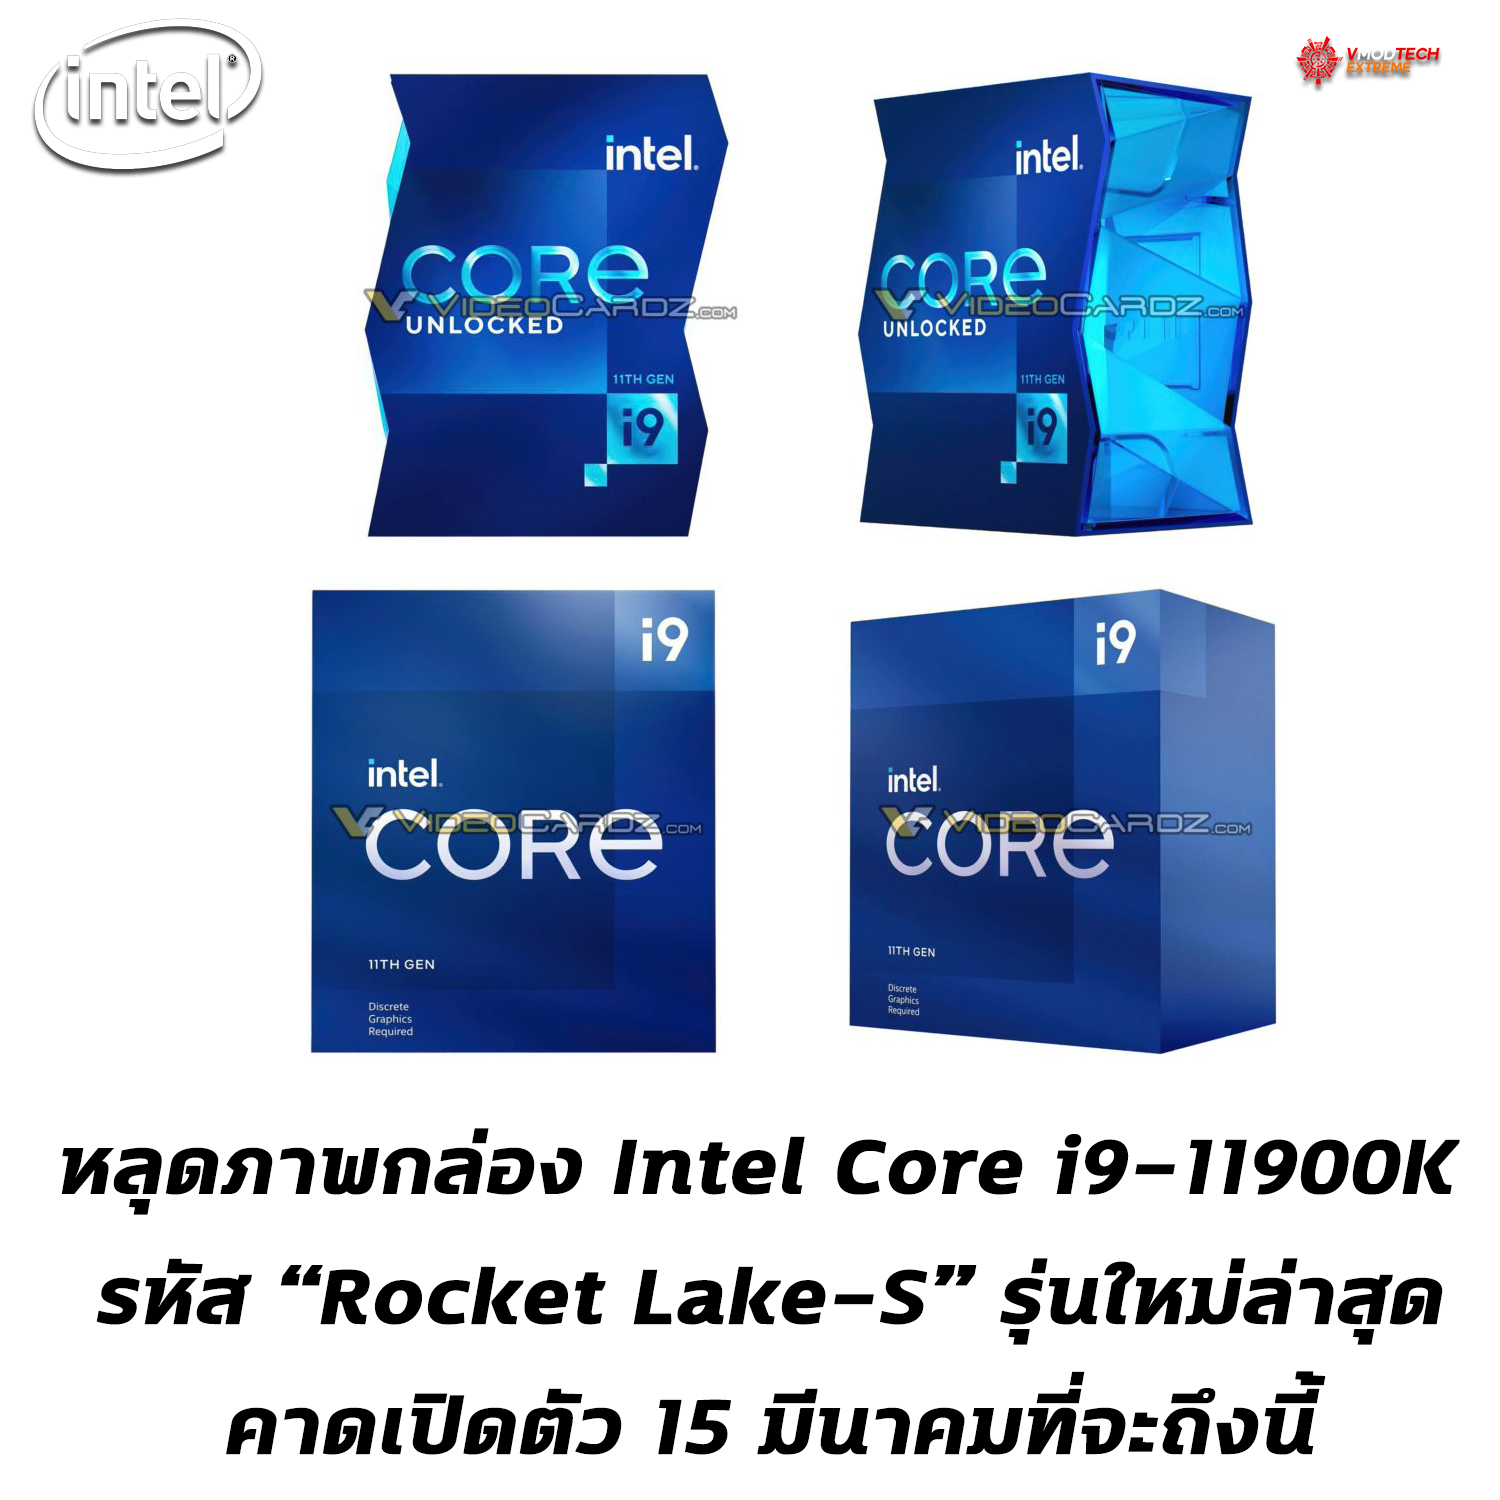 intel core i9 11900k packed หลุดภาพกล่อง Intel Core i9 11900K ในรหัส “Rocket Lake S” รุ่นใหม่ล่าสุดที่เตรียมเปิดตัวเร็วๆ นี้